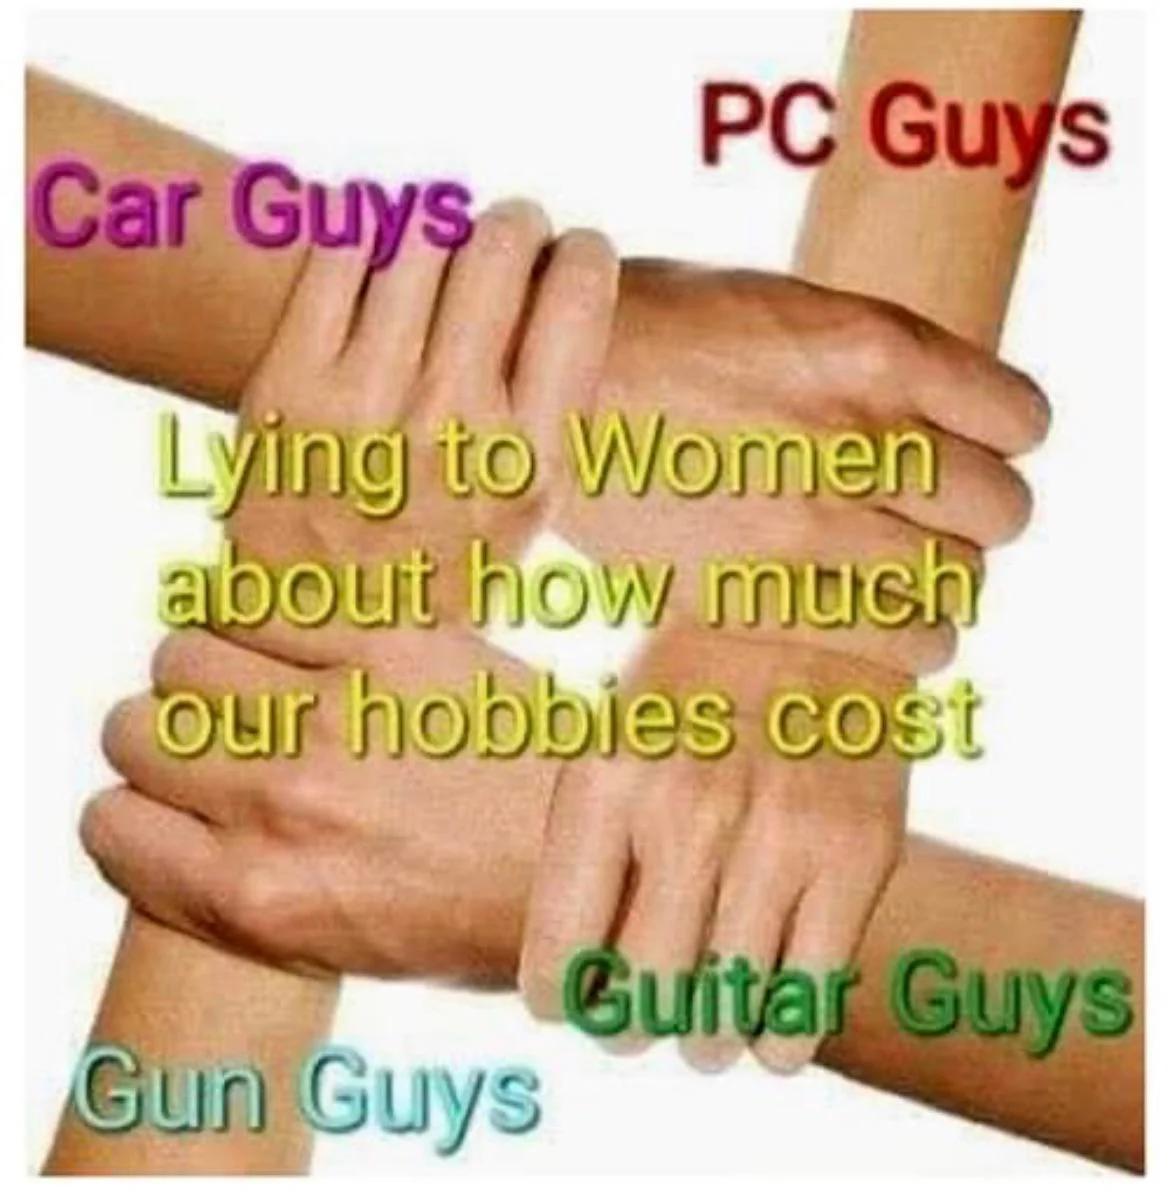 funny memes - dank memes - team spirit clip art - Pc Guys Car Guys Lying to Women about how much our hobbies cost Guitar Guys Gun Guys